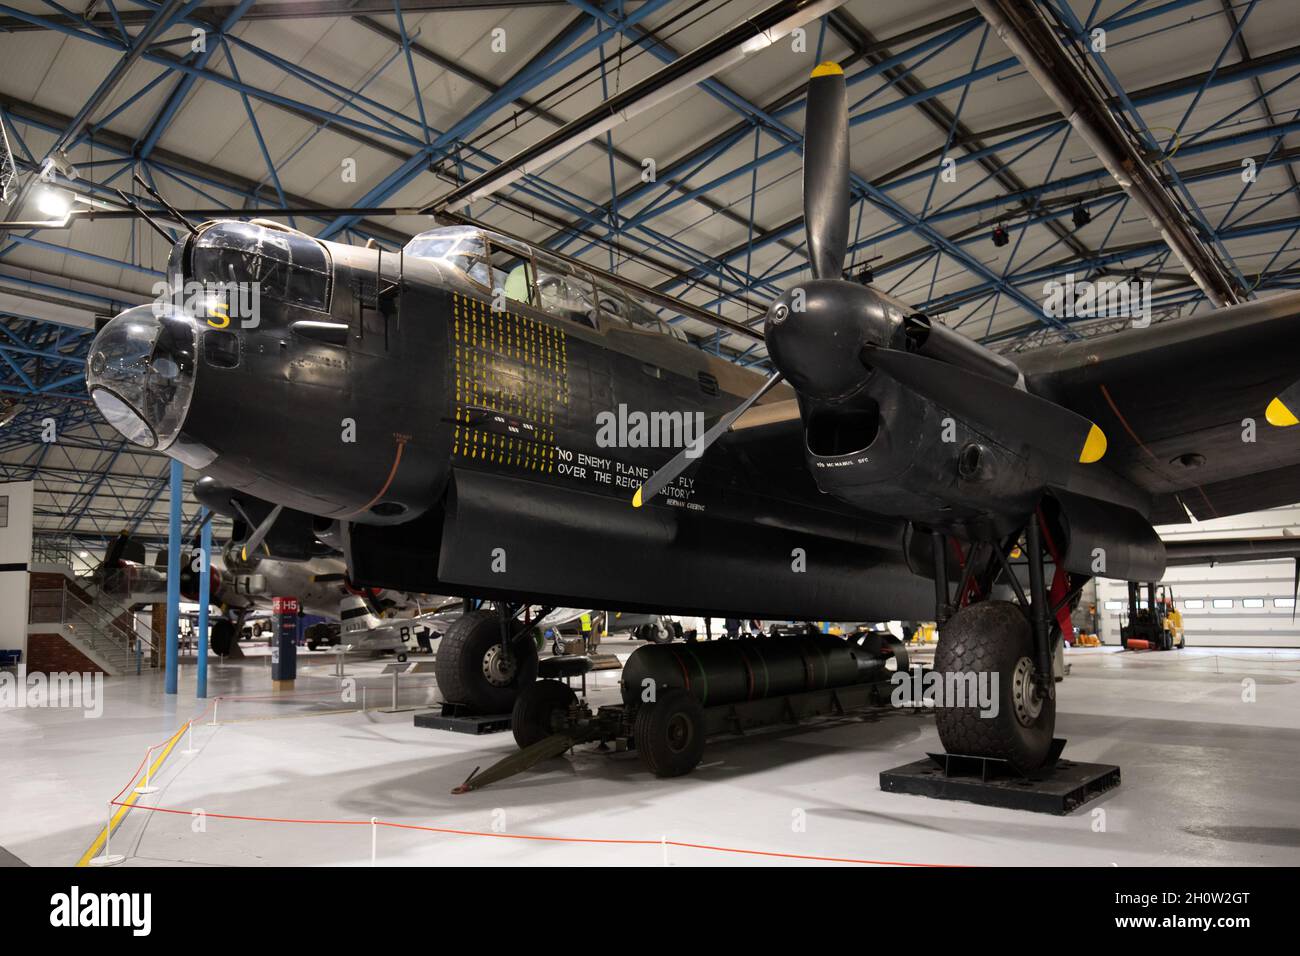 Bomber von Avro Lancaster, Royal Air Force Museum, London Stockfoto